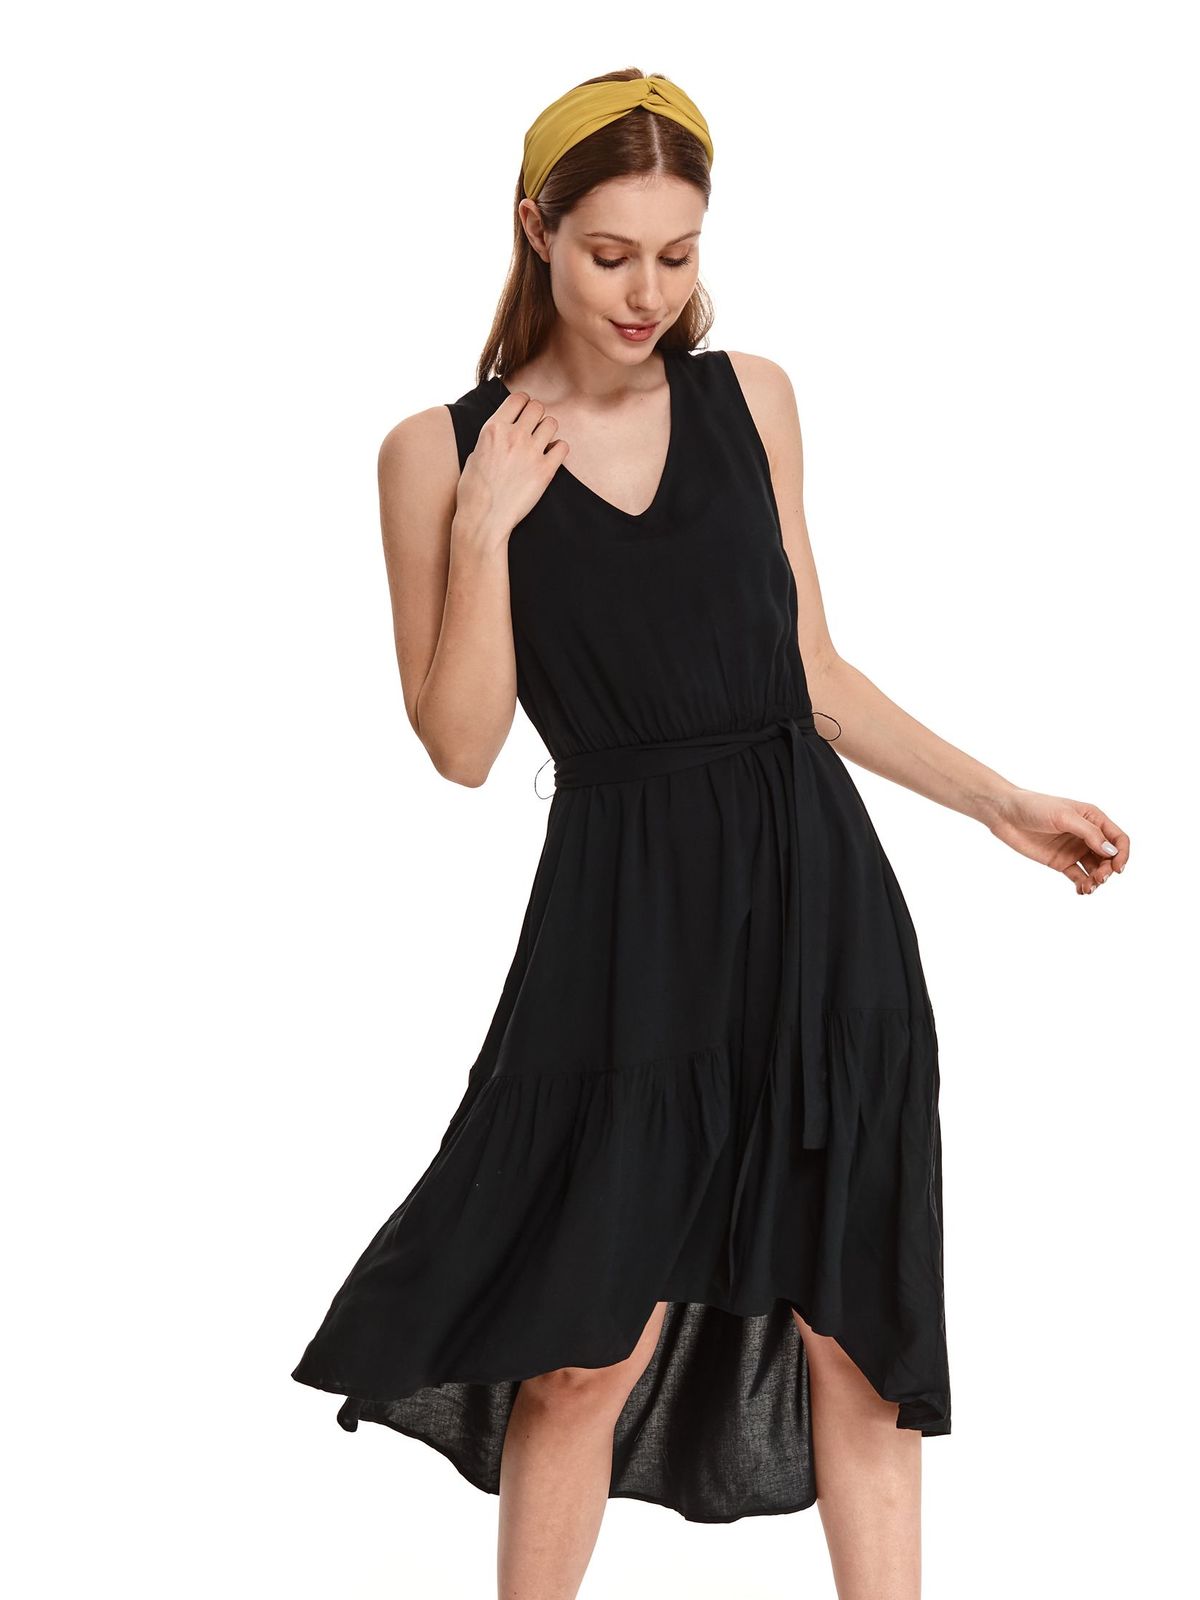 Black dress midi cloche asymmetrical with v-neckline thin fabric